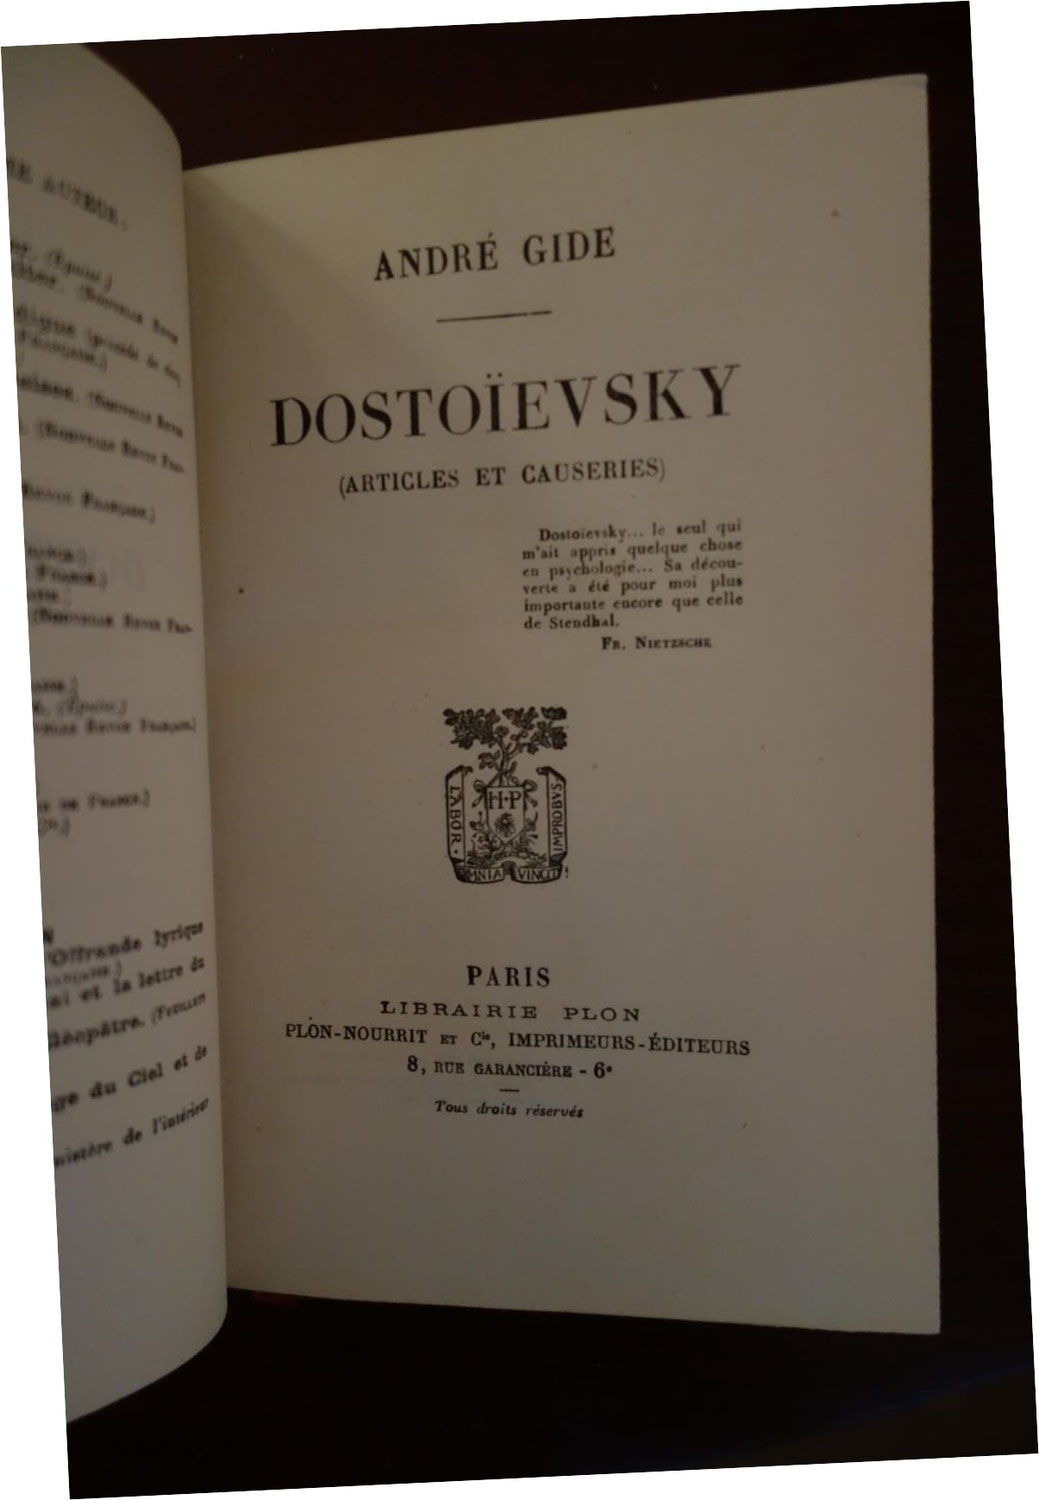 André GIDE, Dostoïevsky, Plon, 1923, édition originale